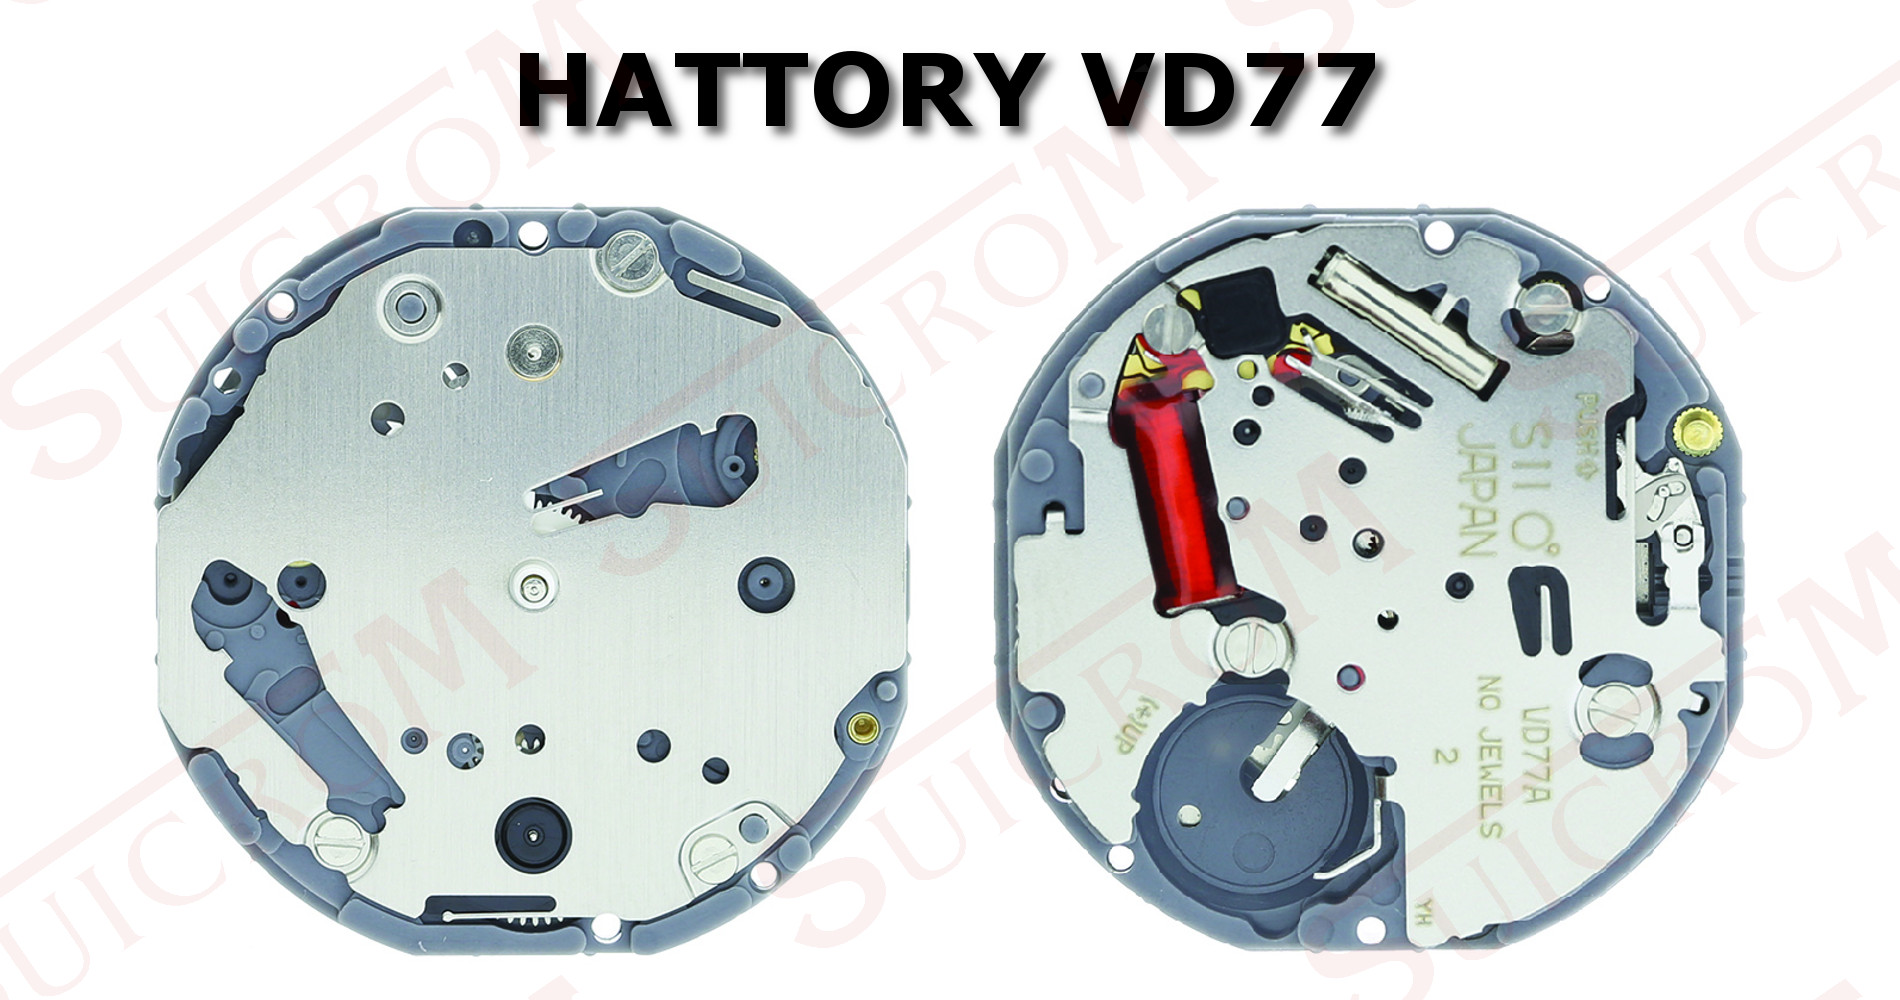 Movimiento Hattory Vd77